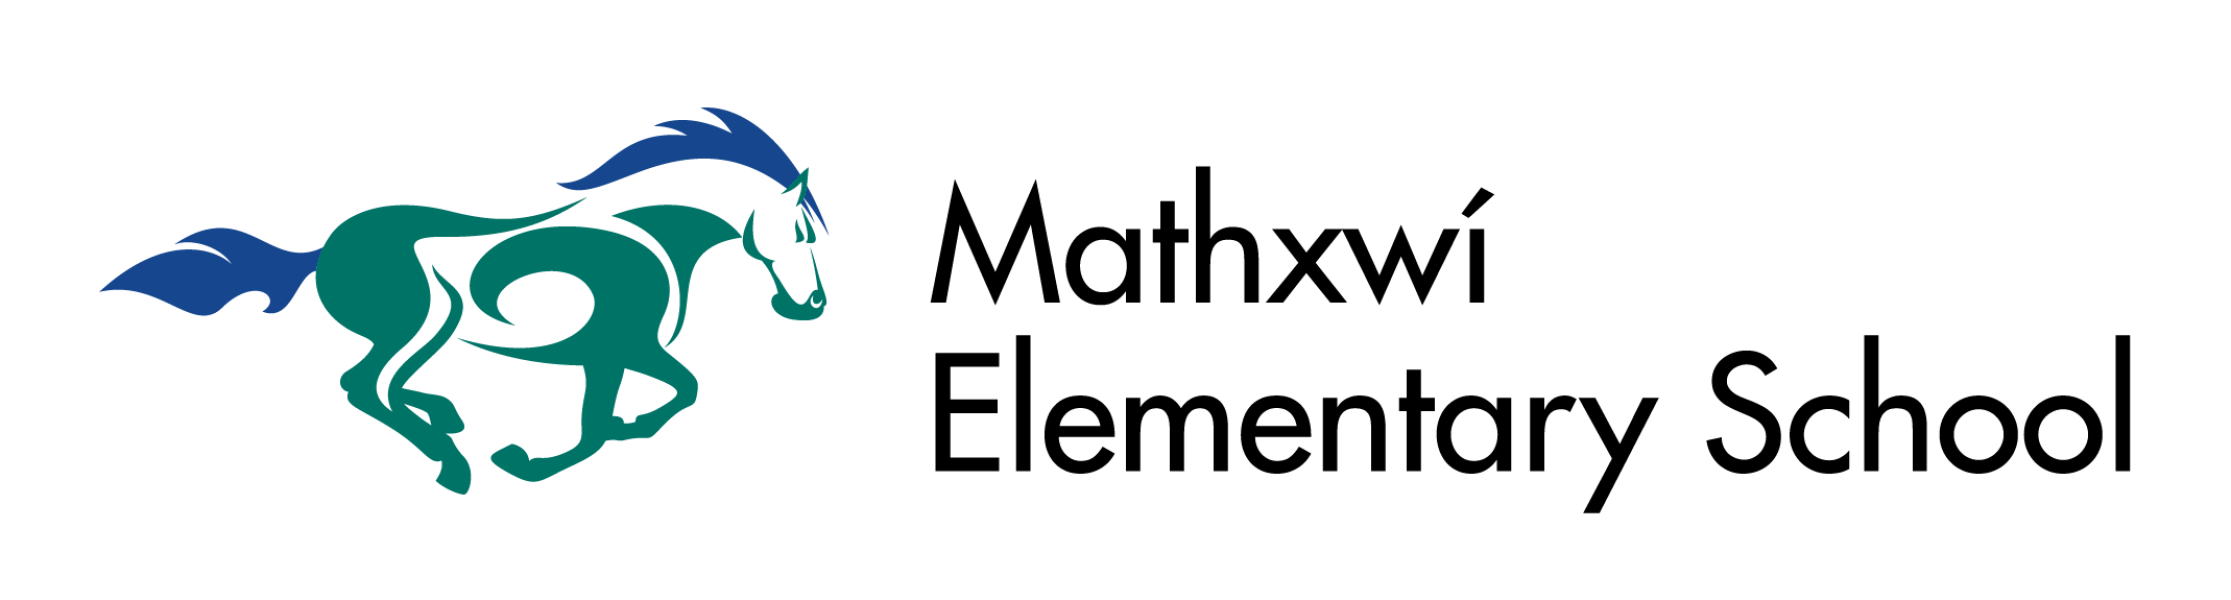 Mathxwi Elementary School logo